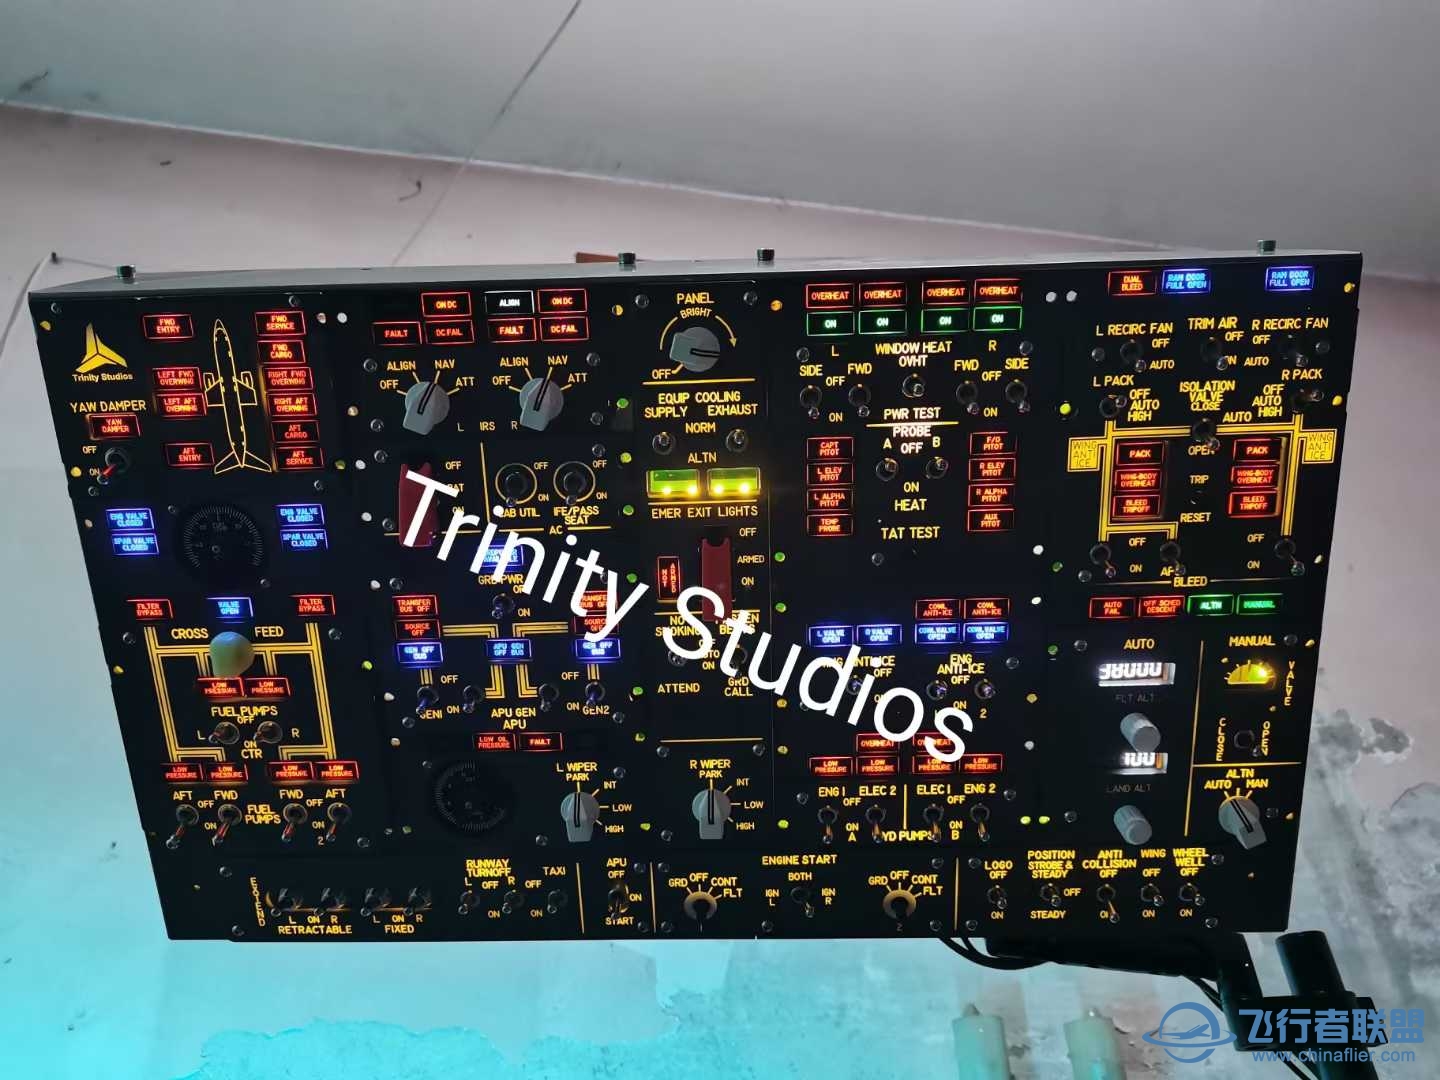 Trinity Studios 新品预告 ——家用版迷你738顶板-5005 